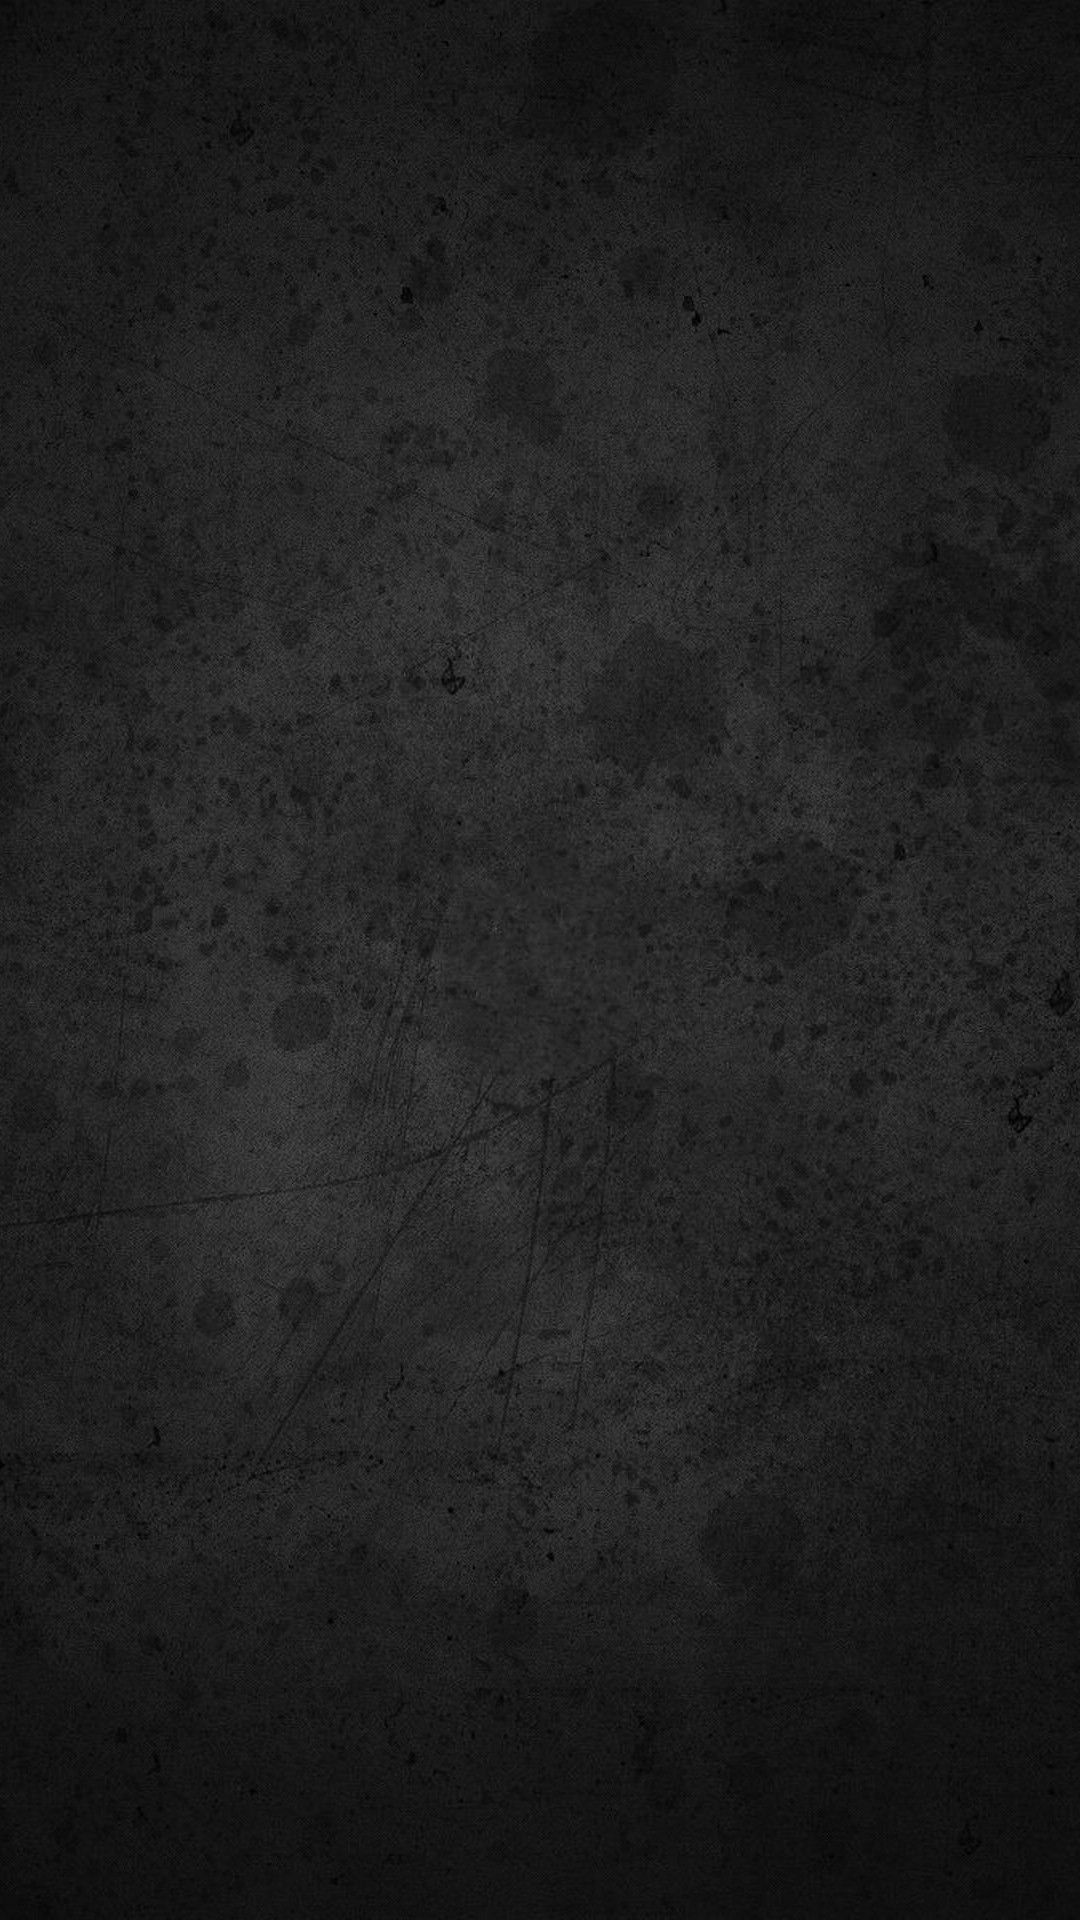 Dark Microsoft Phone Wallpaper Kecbiokecbio.com